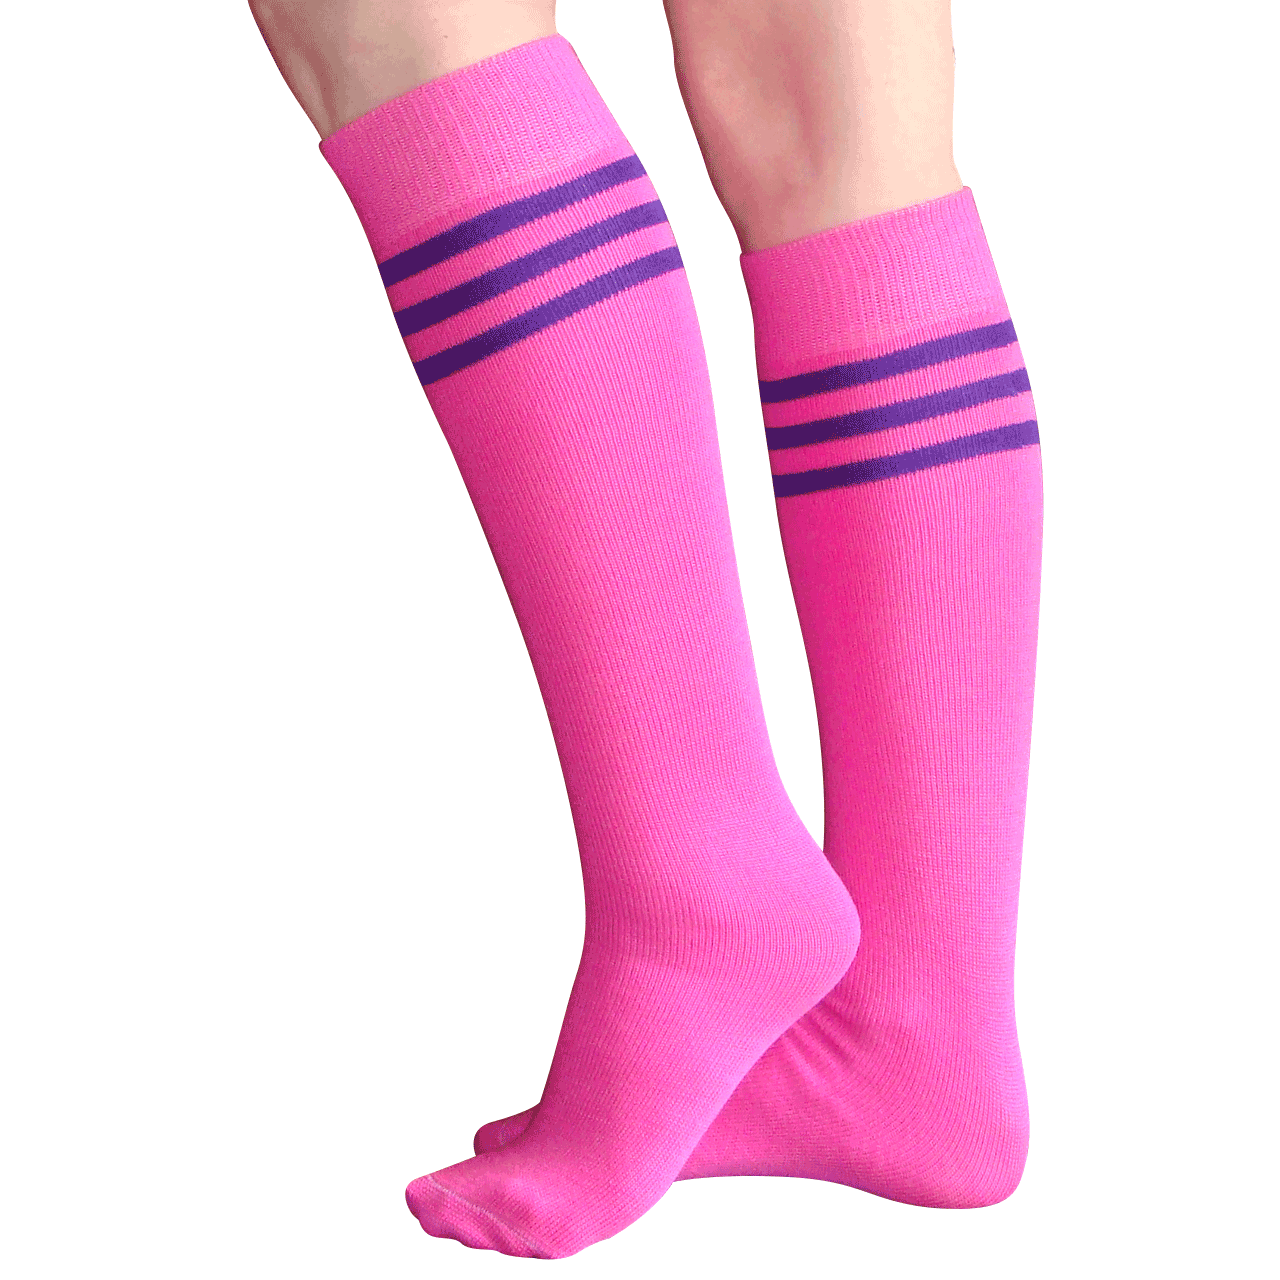 Pink Knee High Socks - Made in USA